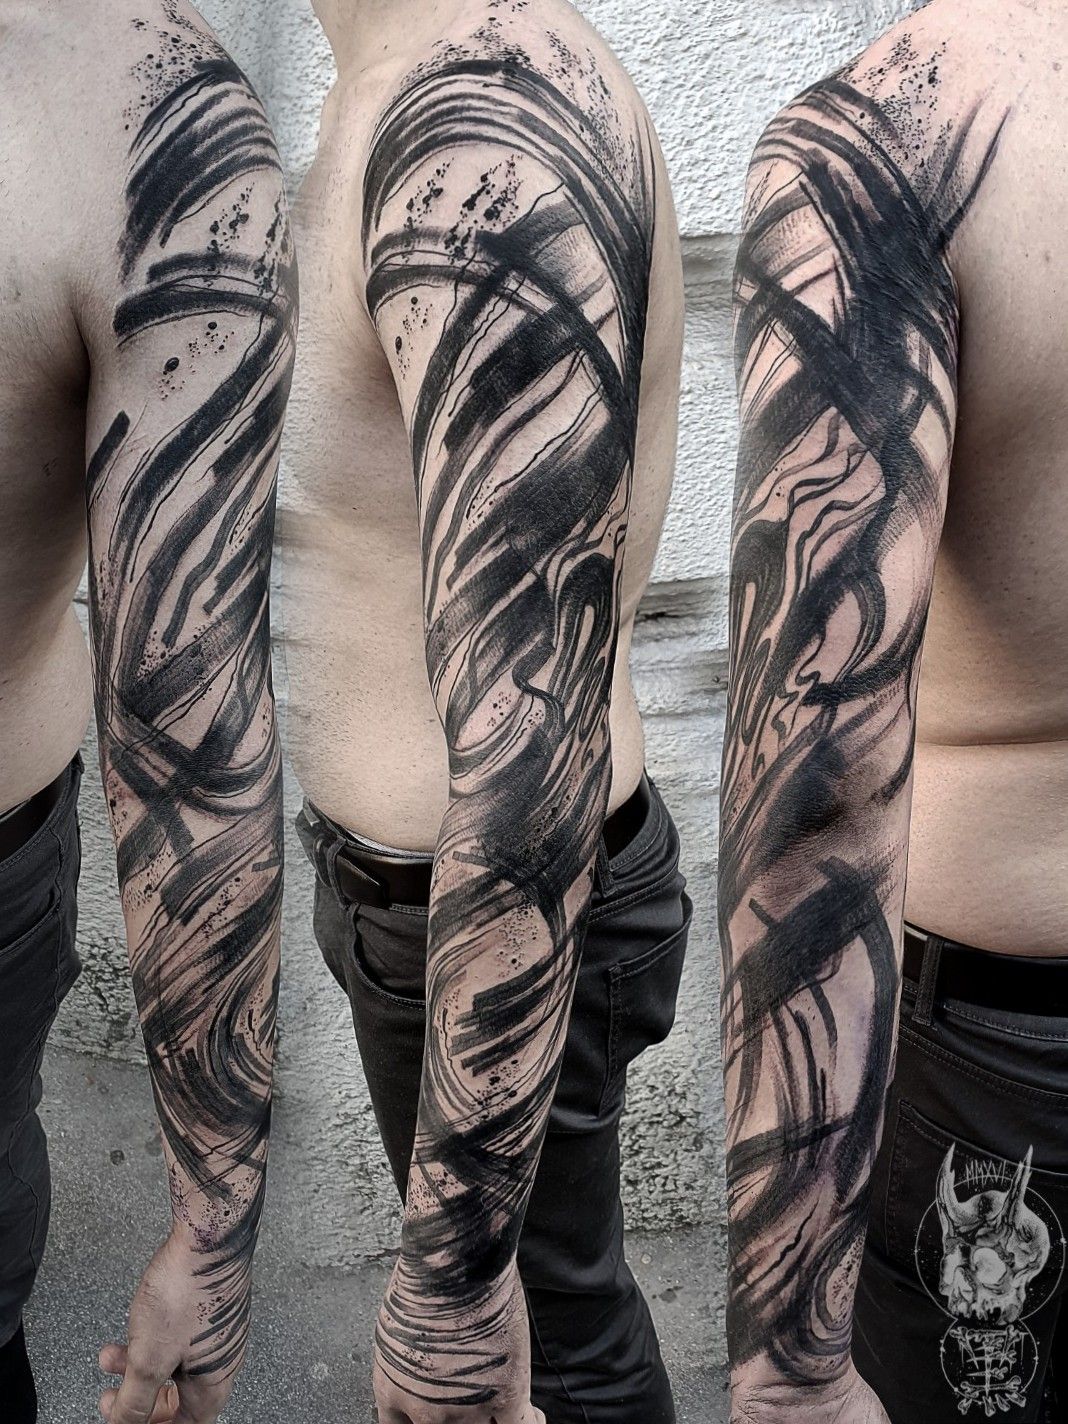 Tattoo tagged with abstract tatuaje wongpuiyee arm tatuajes black  big brush stroke other watercolor  inkedappcom